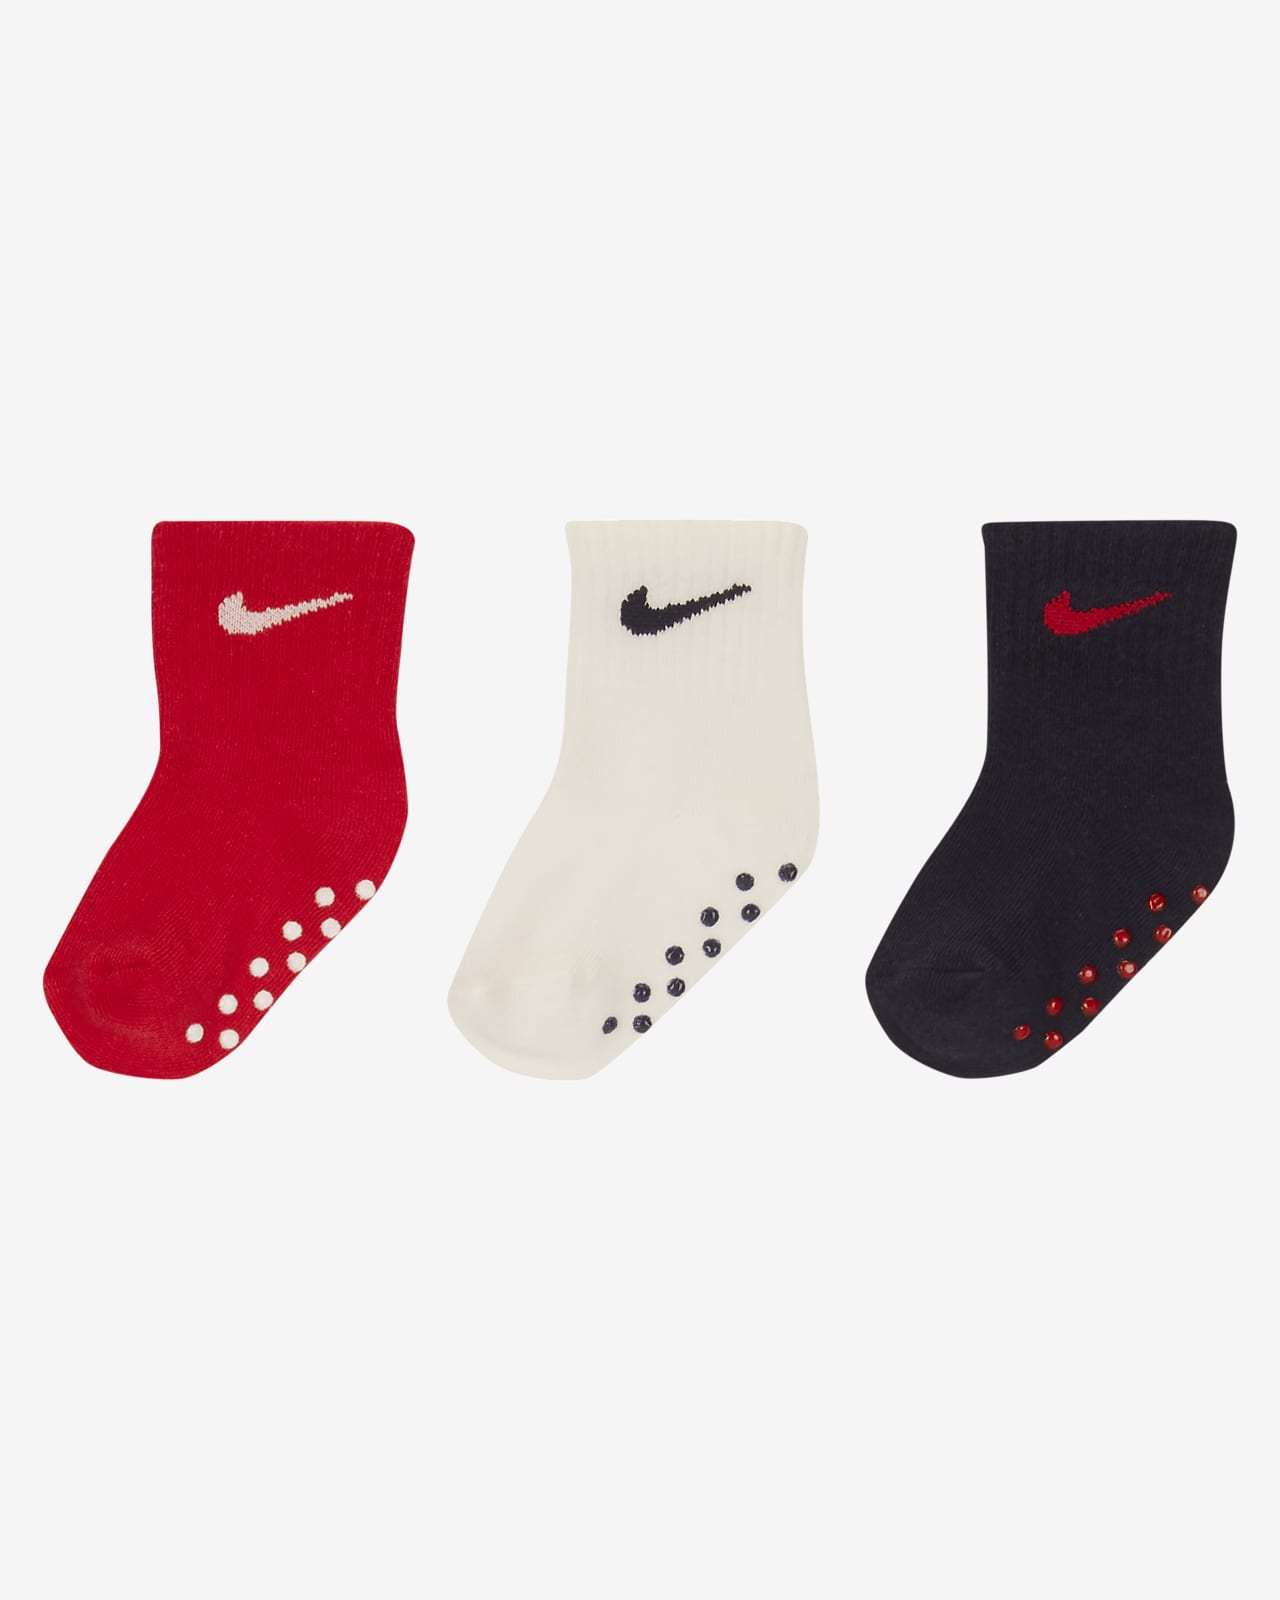 Nike Toddler Ankle Socks (3 Pairs)